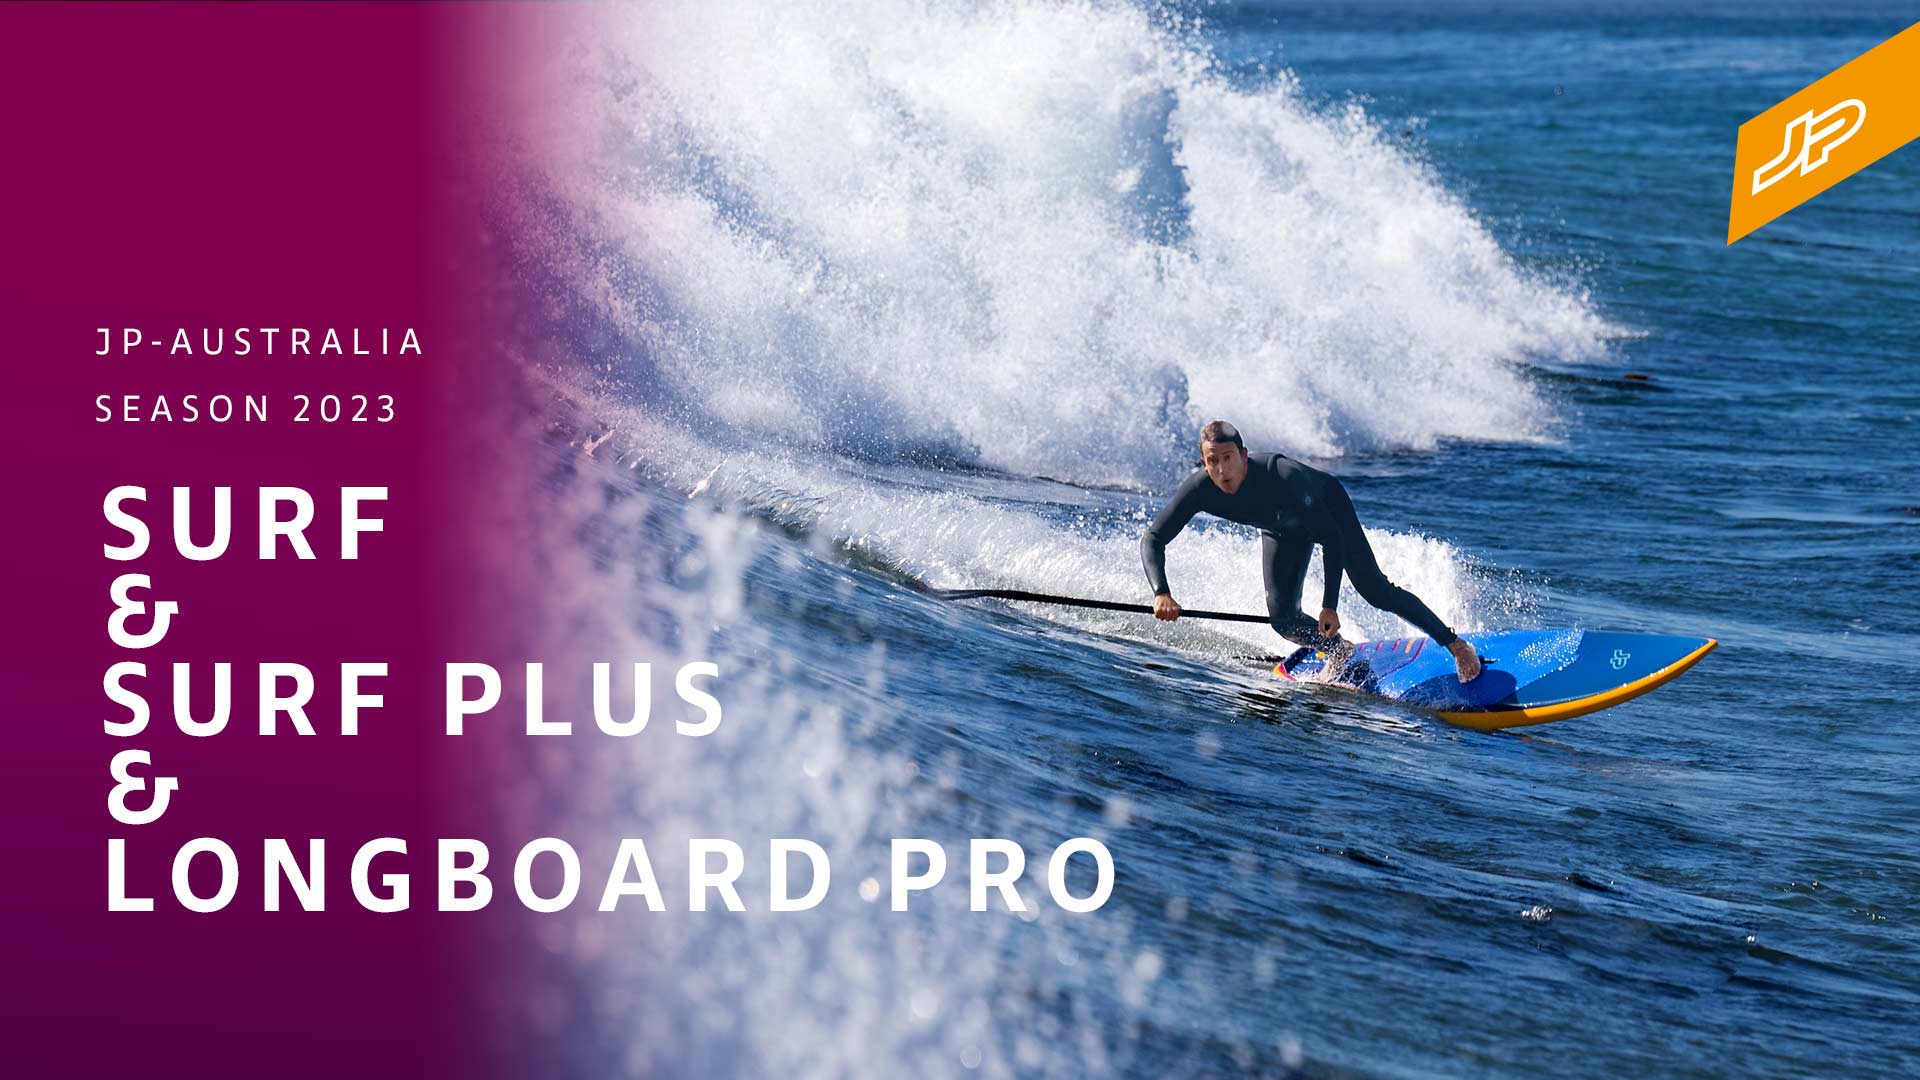 Surf Wide - JP Australia - Full Action in full comfort for SUP surfing